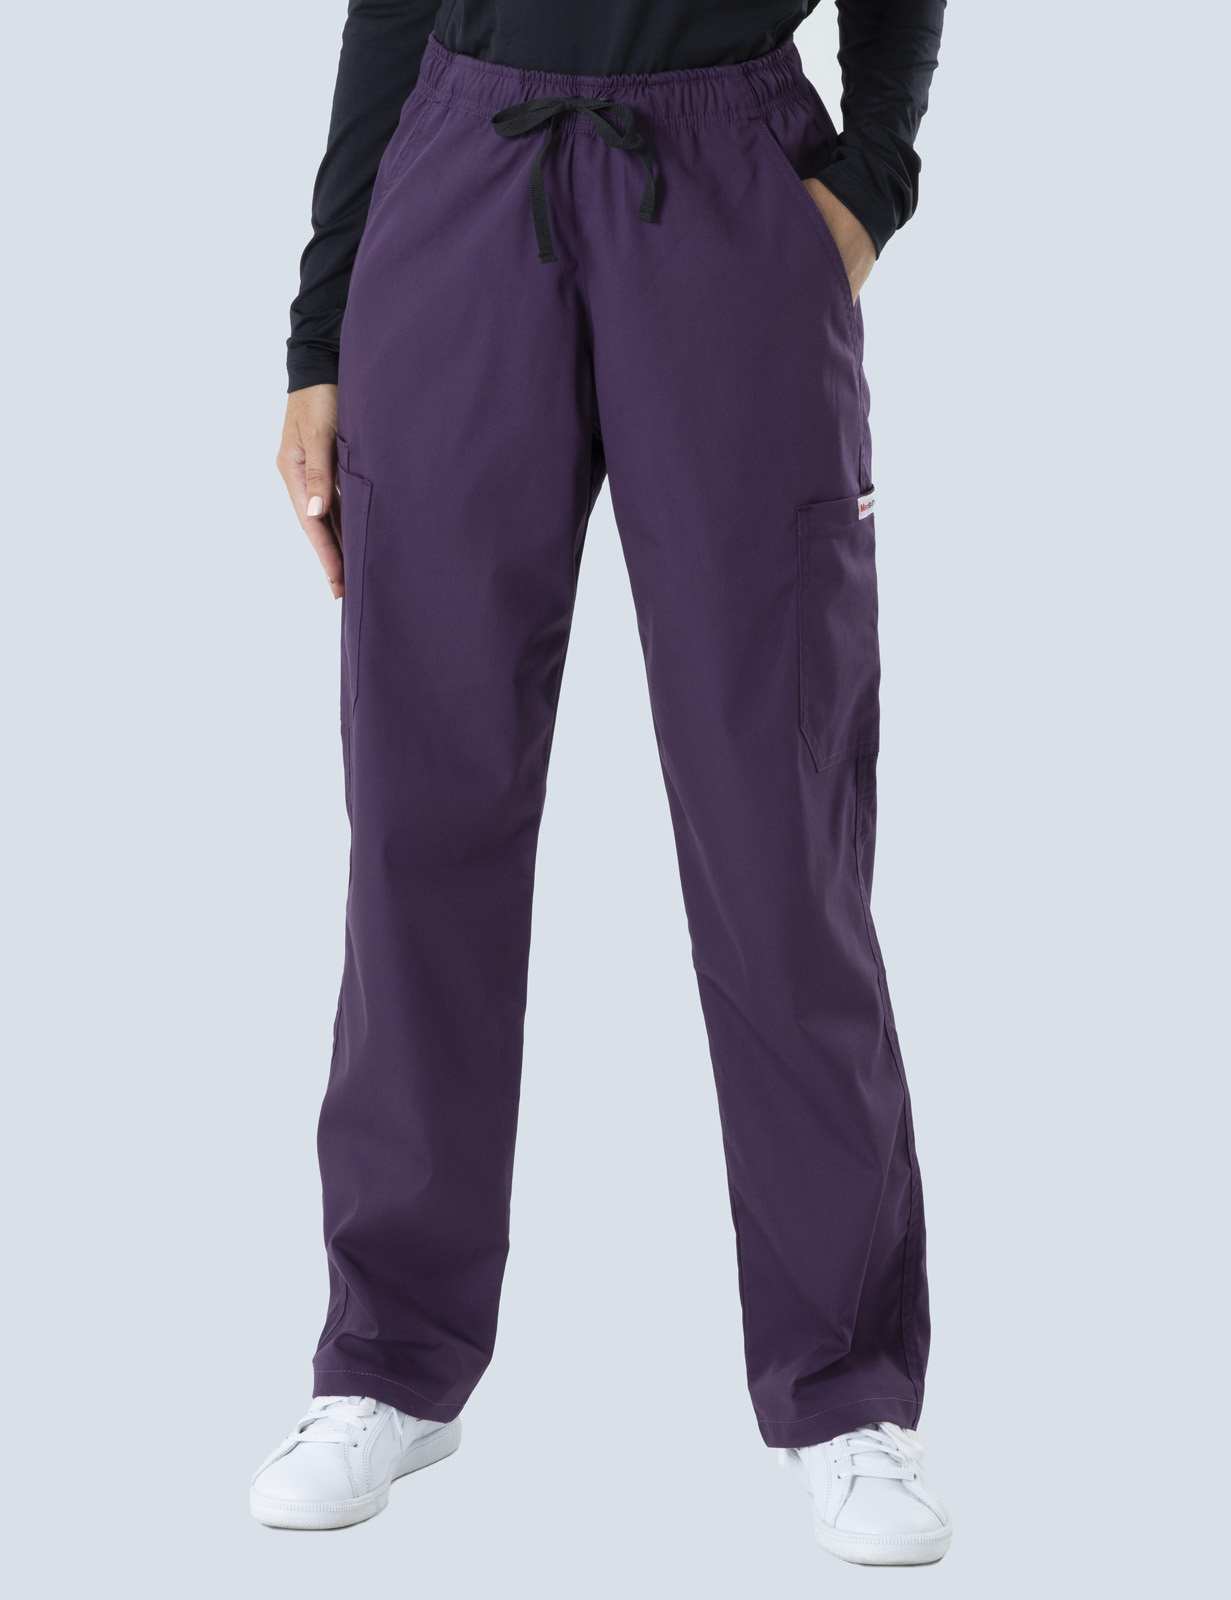 Women's Cargo Performance Pants - Aubergine - 2X Large